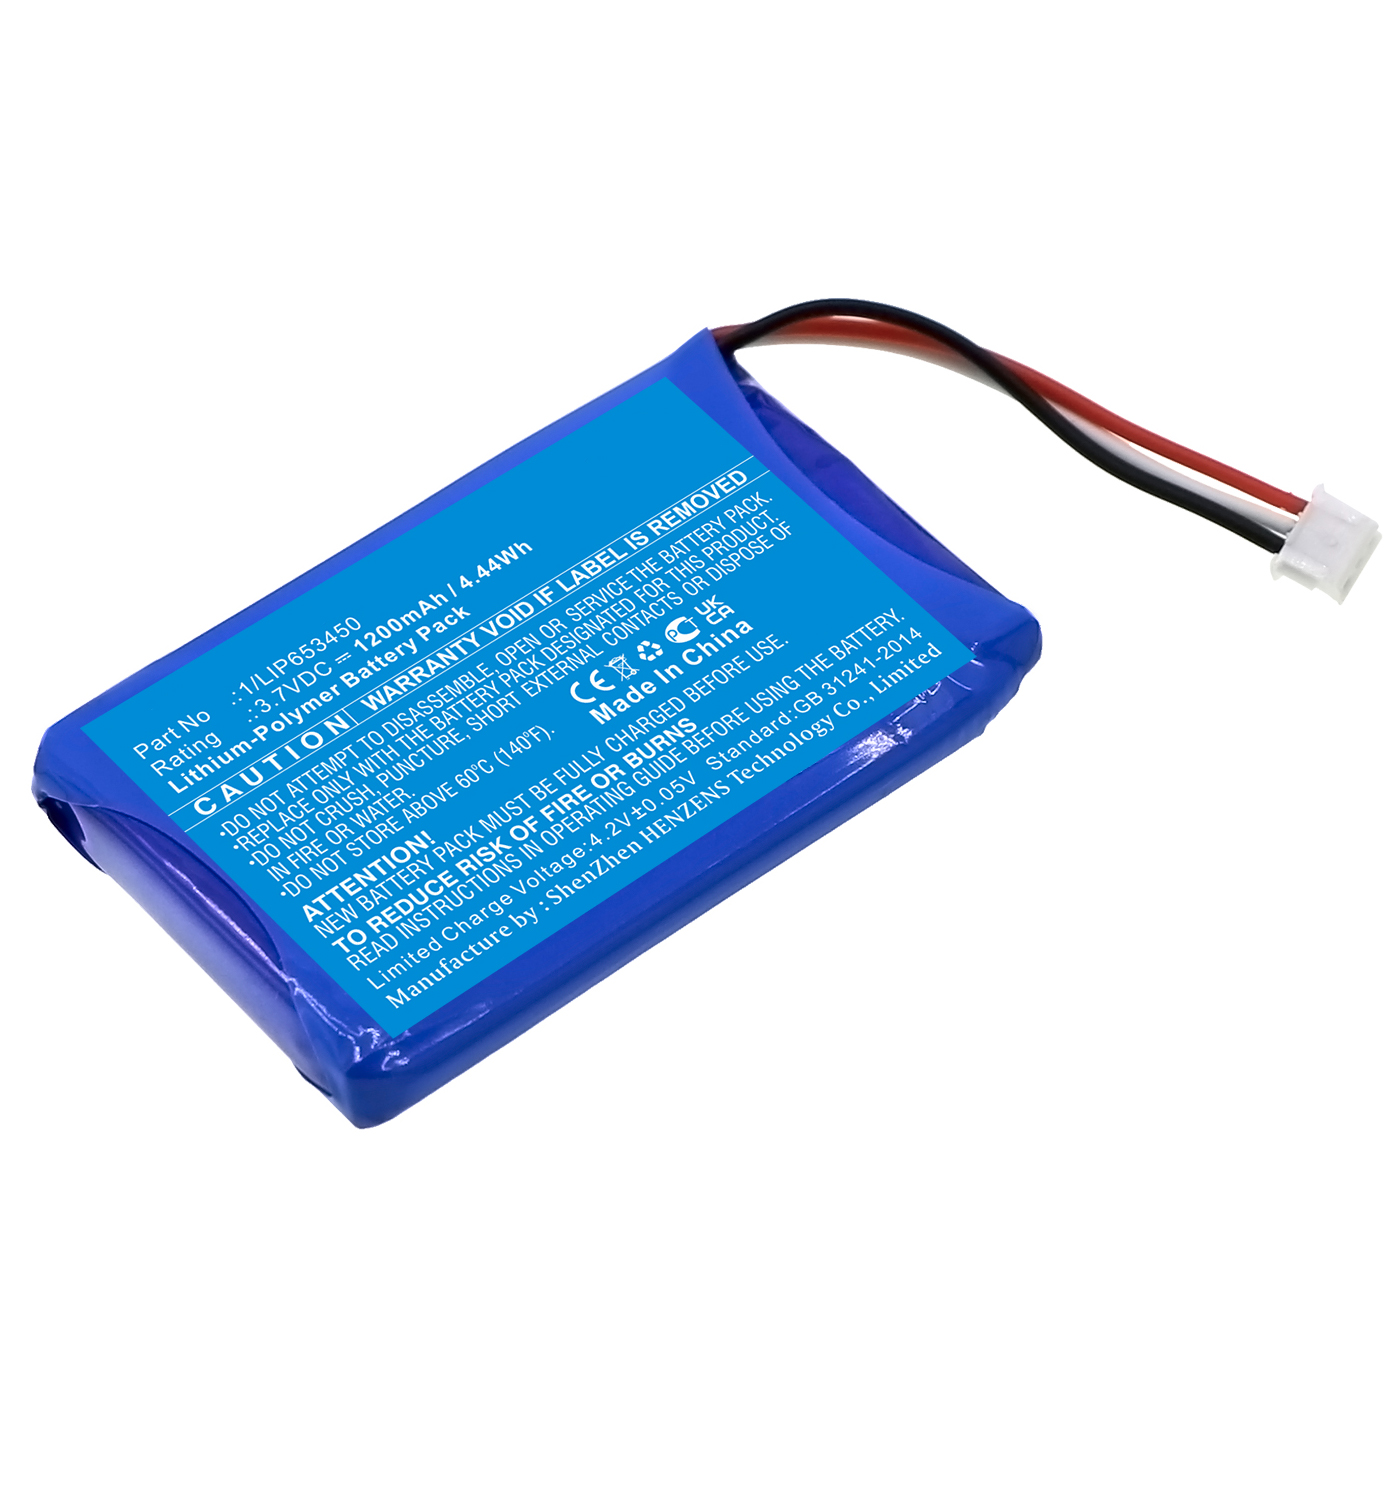 Synergy Digital Remote Control Battery, Compatible with Range Rover 1/LIP653450 Remote Control Battery (Li-Pol, 3.7V, 1200mAh)